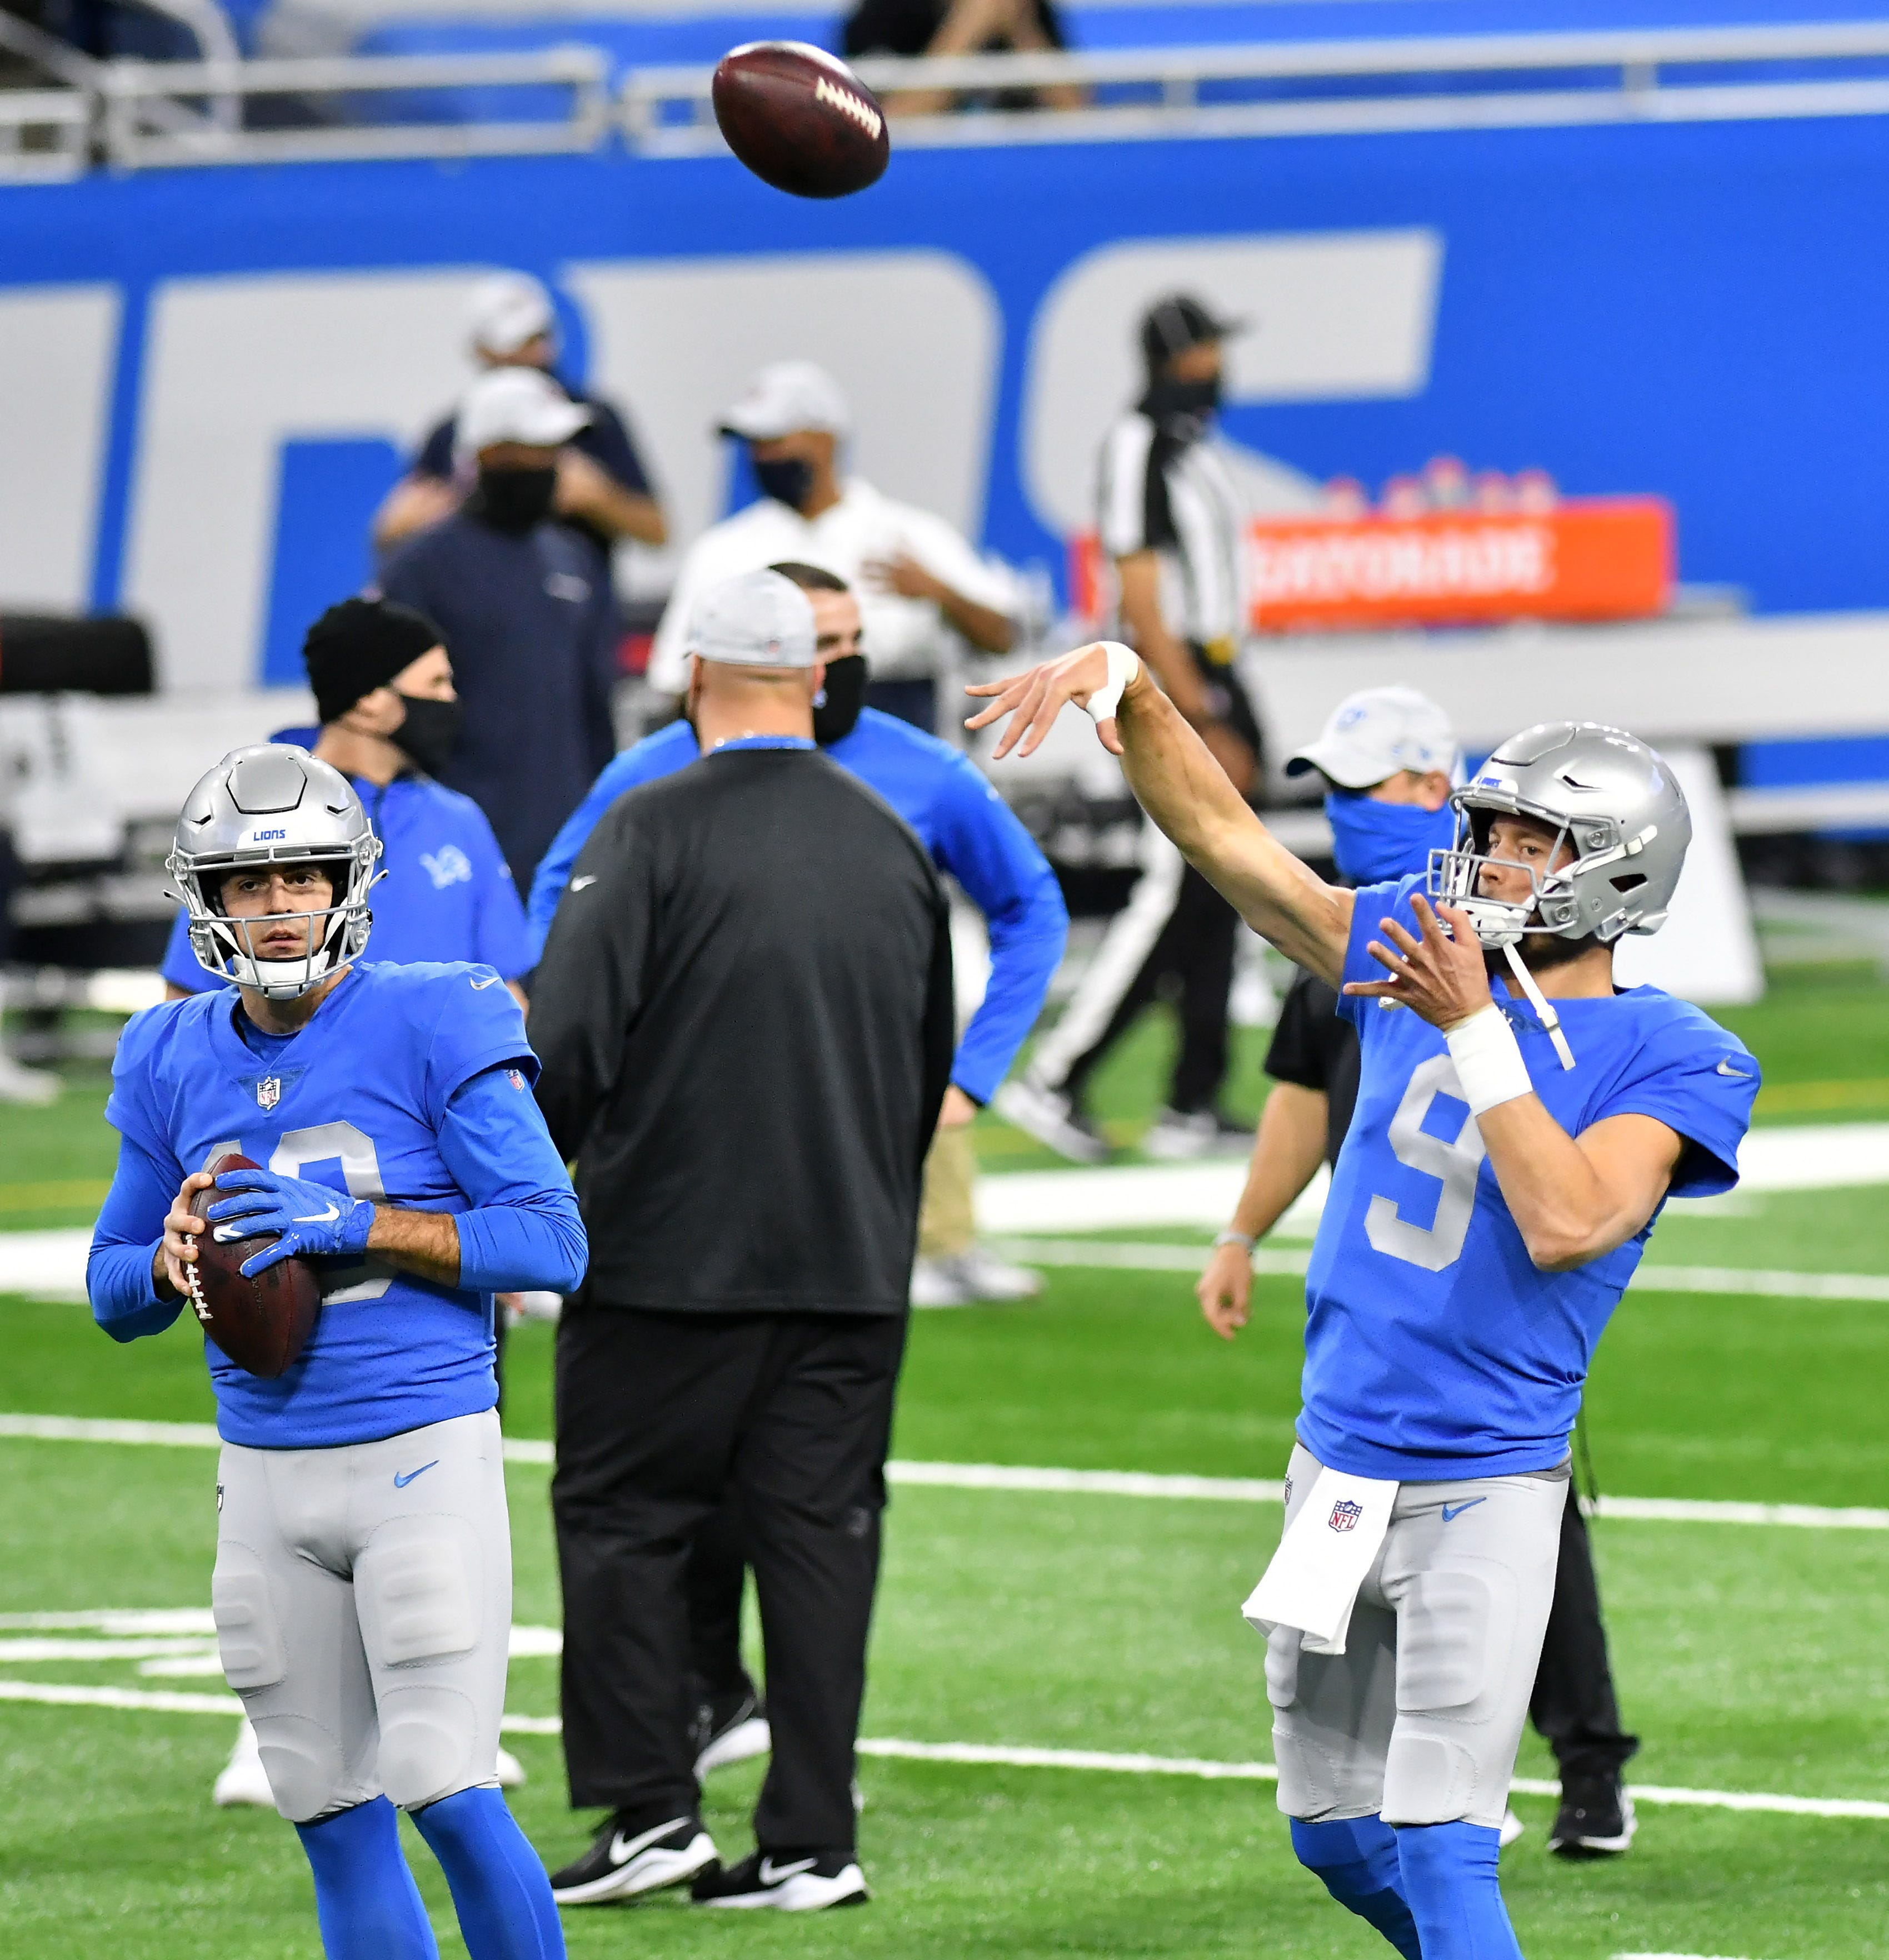 Lions quarterback Matthew Stafford (9) warms up next to Lions quarterback David Blough (10) before the game.